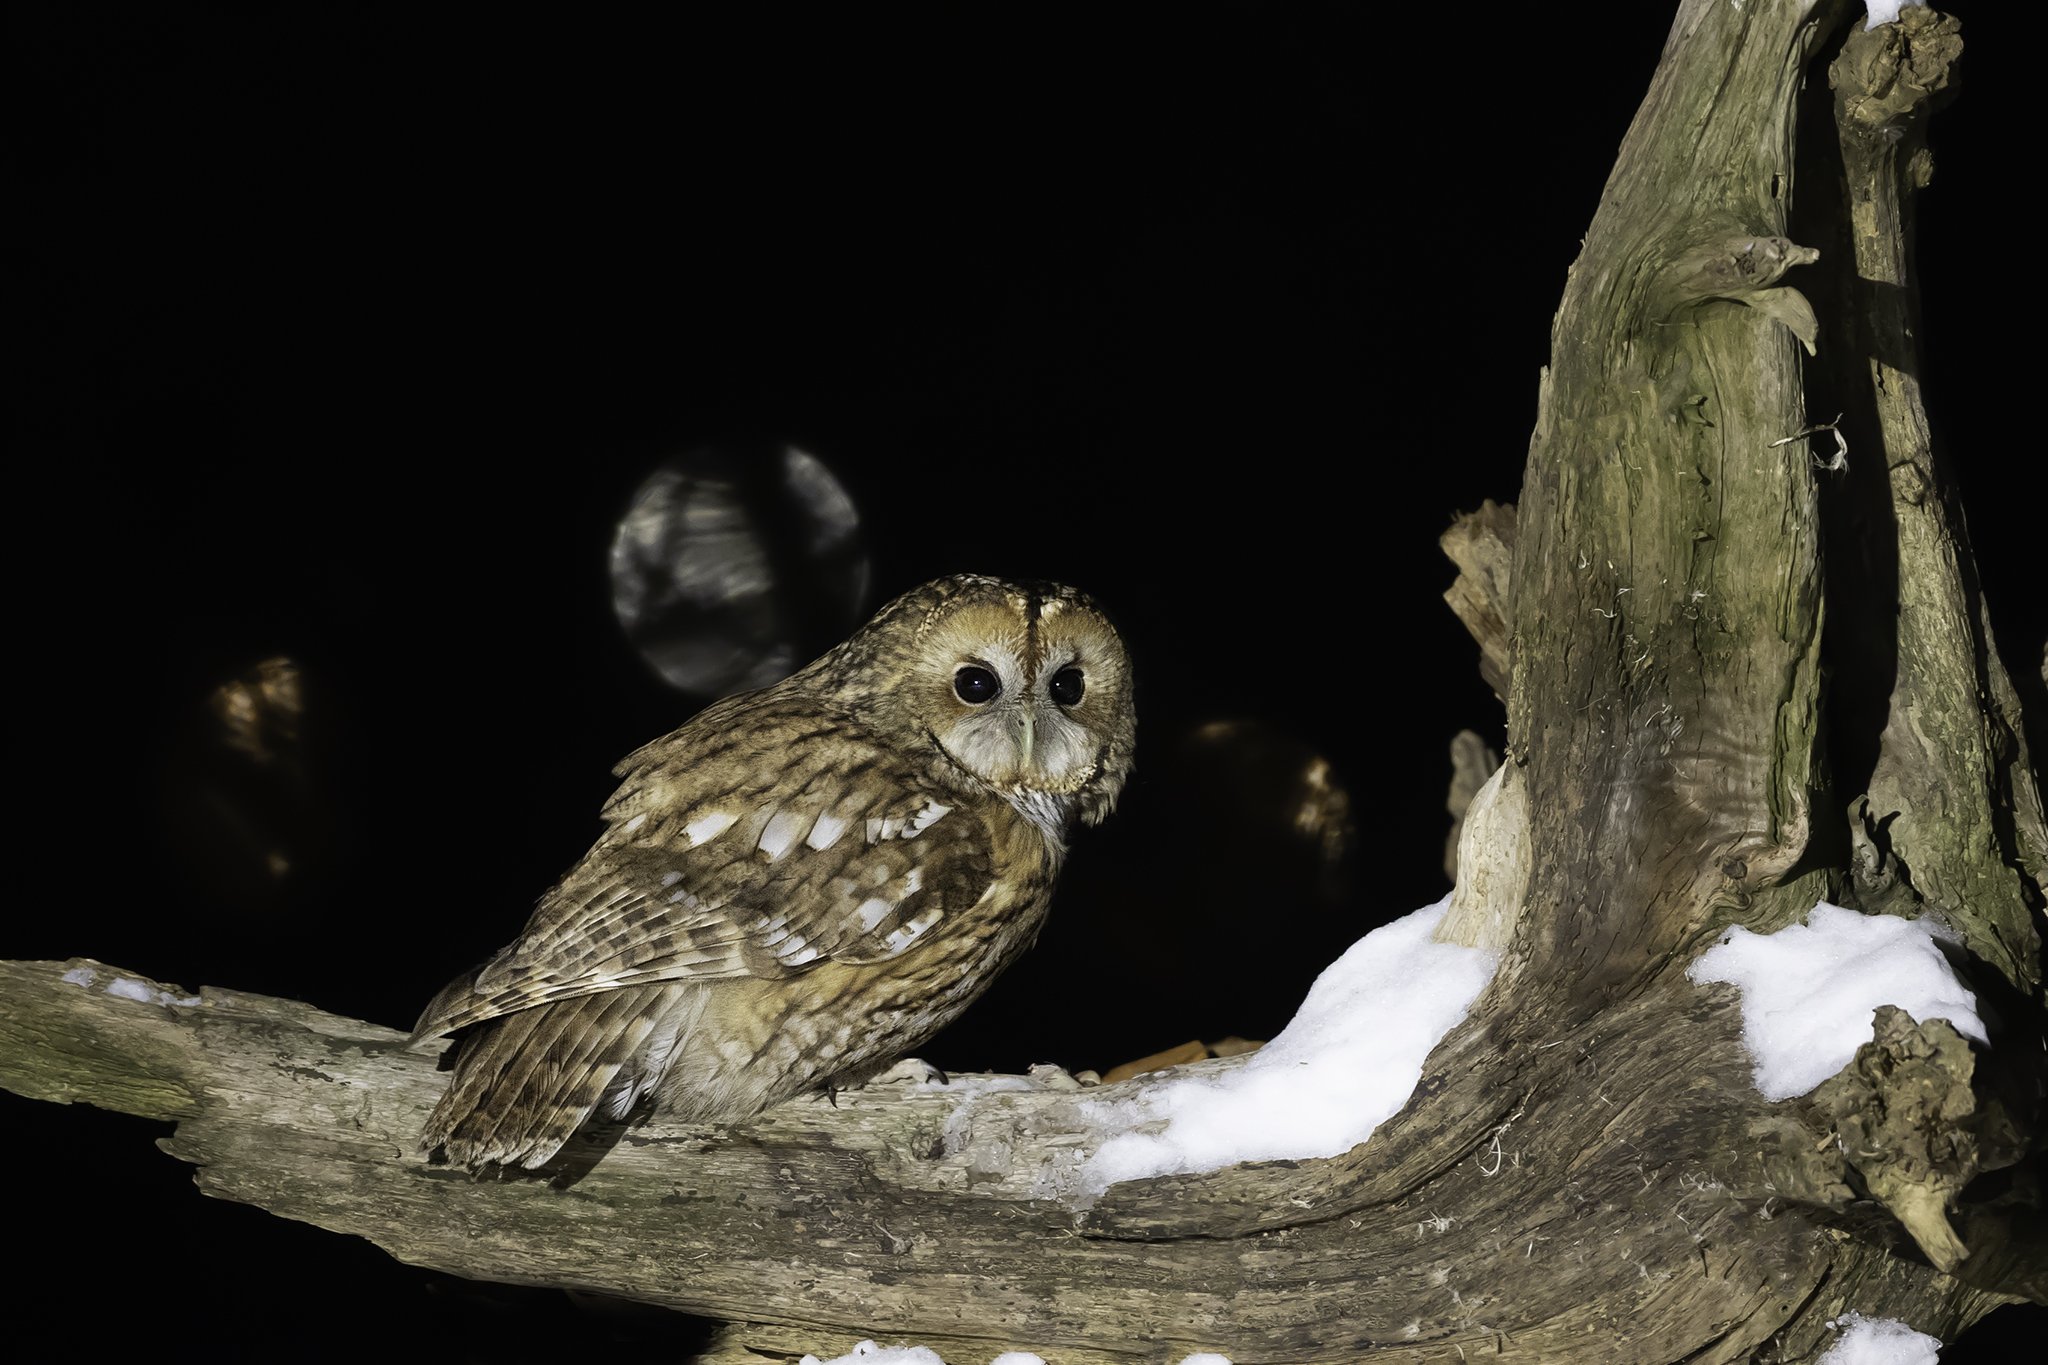  Tawny owl - Strix aluco - Kattugle 